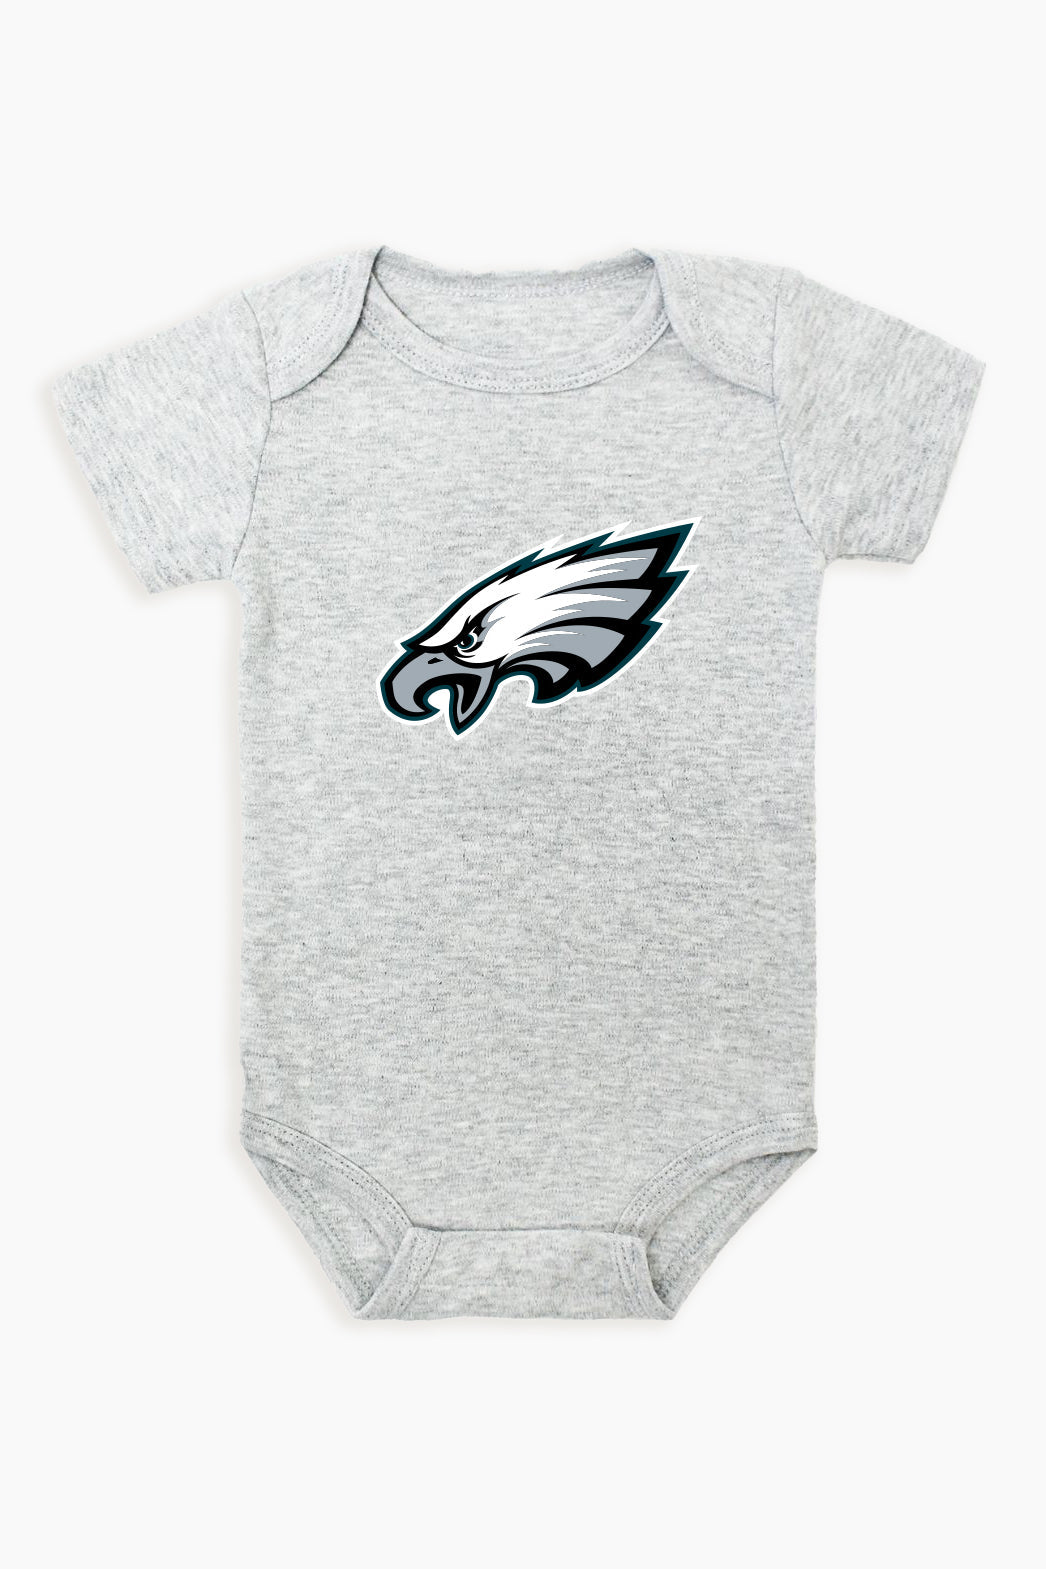 NFL Grey Baby Short-Sleeve Bodysuit - NFC Division